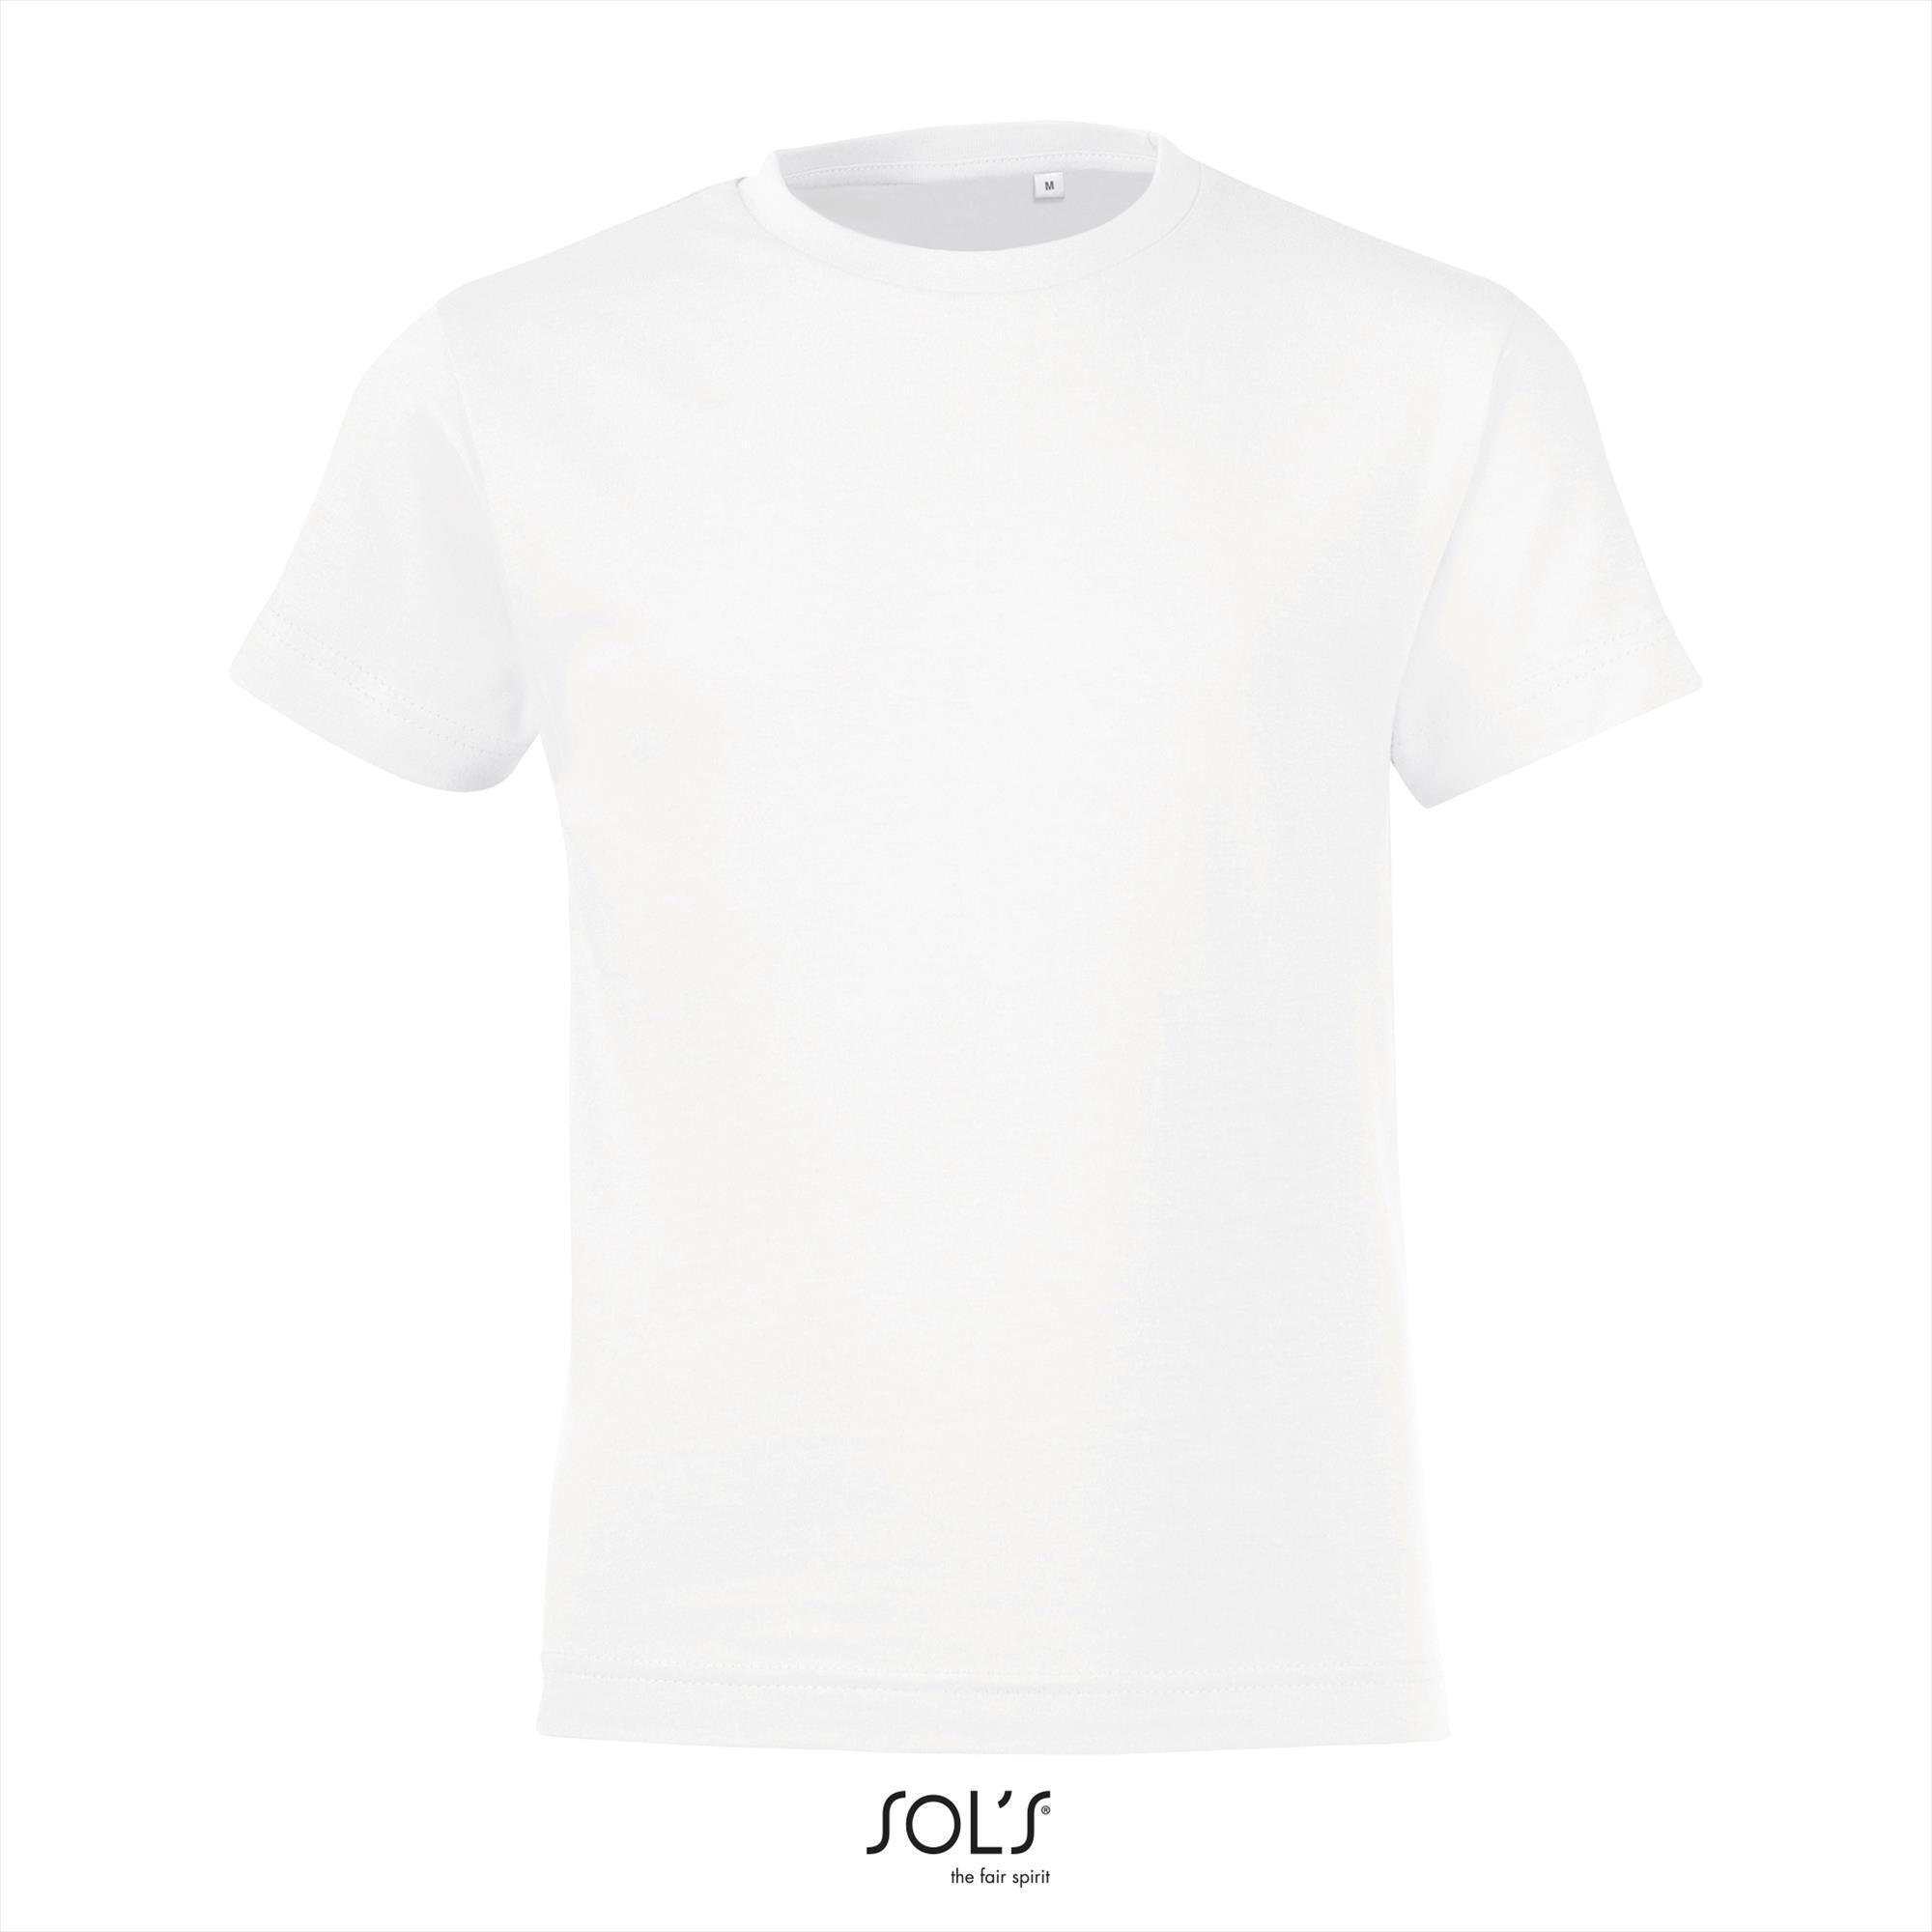 Kinder shirt wit Sol's 150 Regent fit